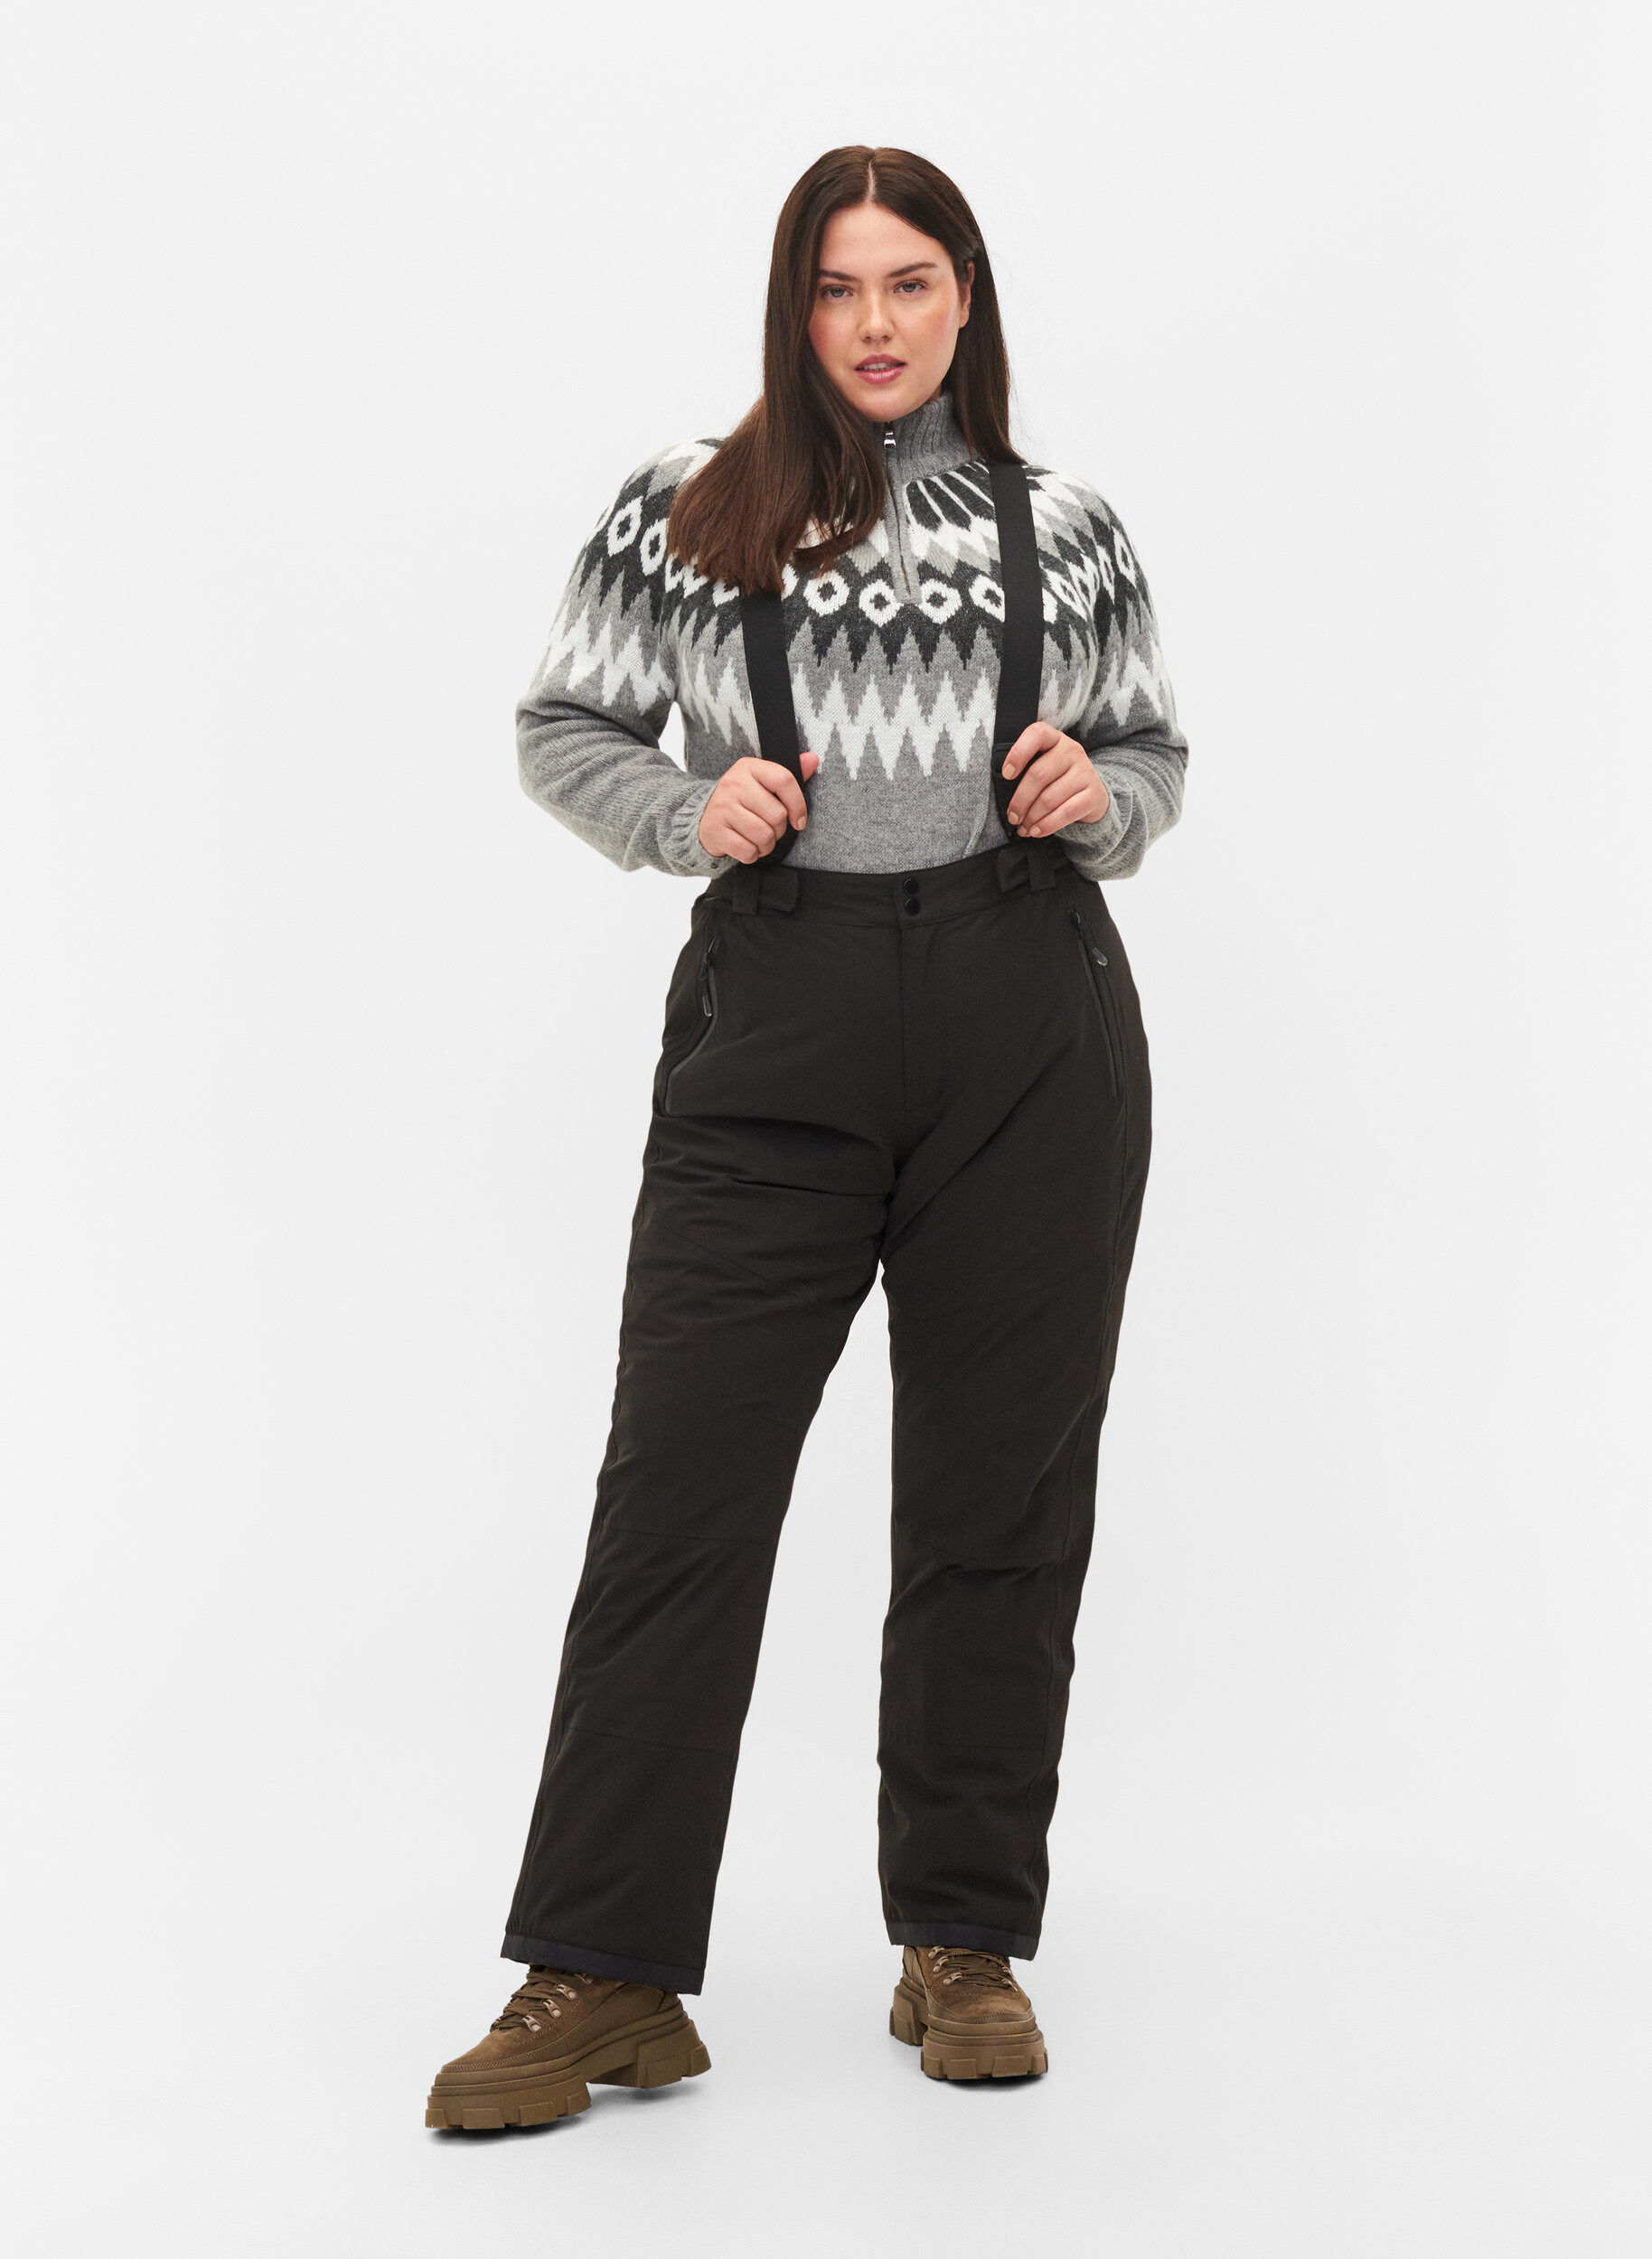 Ladies Size 8 Topshop Sno Black Snow Ski Pants Salopettes With Braces Bnwt    eBay